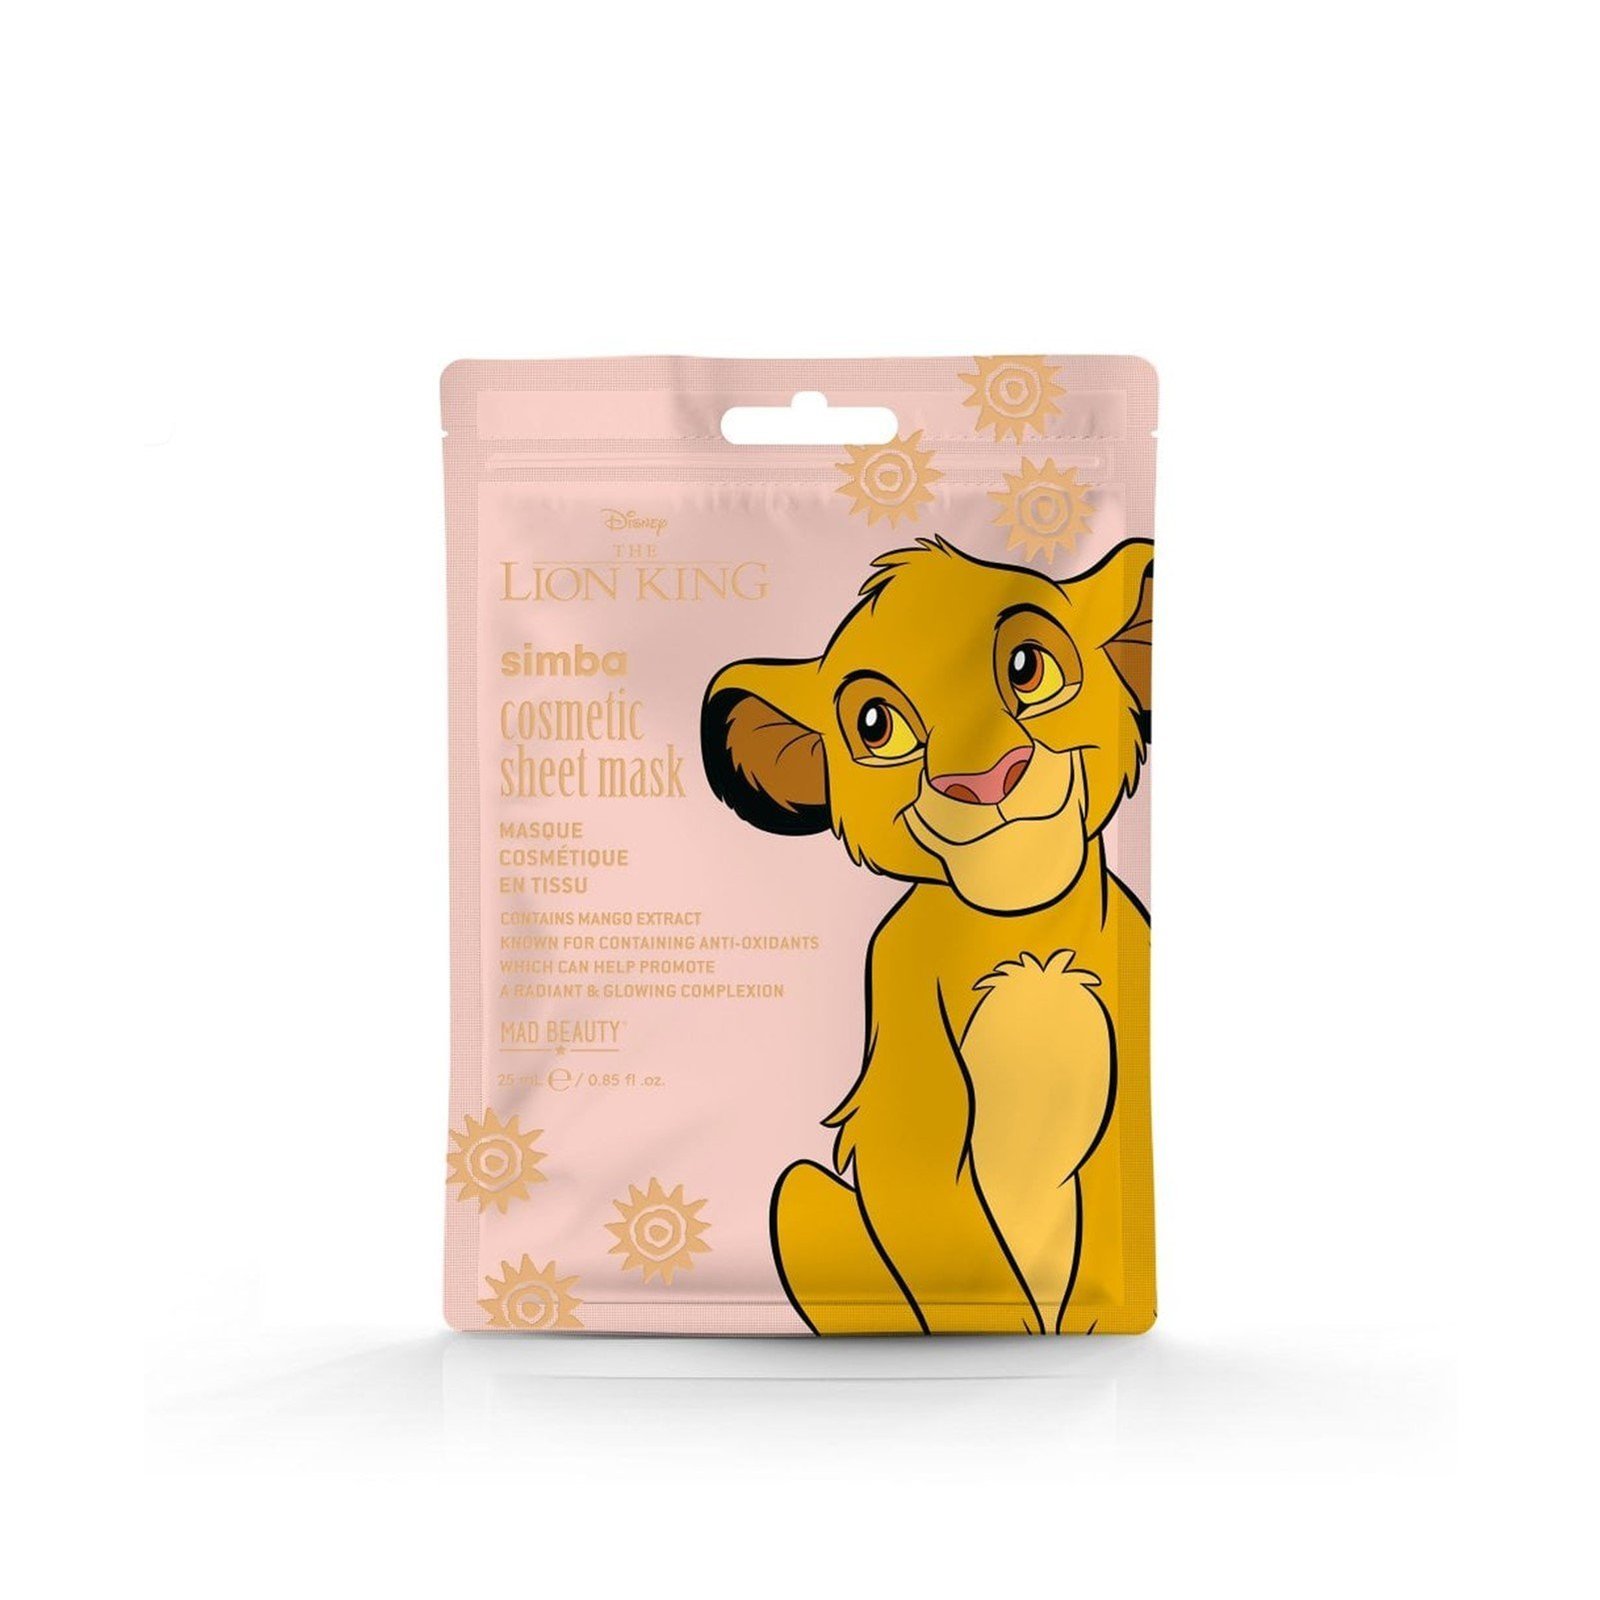 Mad Beauty Disney The Lion King Cosmetic Sheet Mask Simba 25ml (0.84floz)